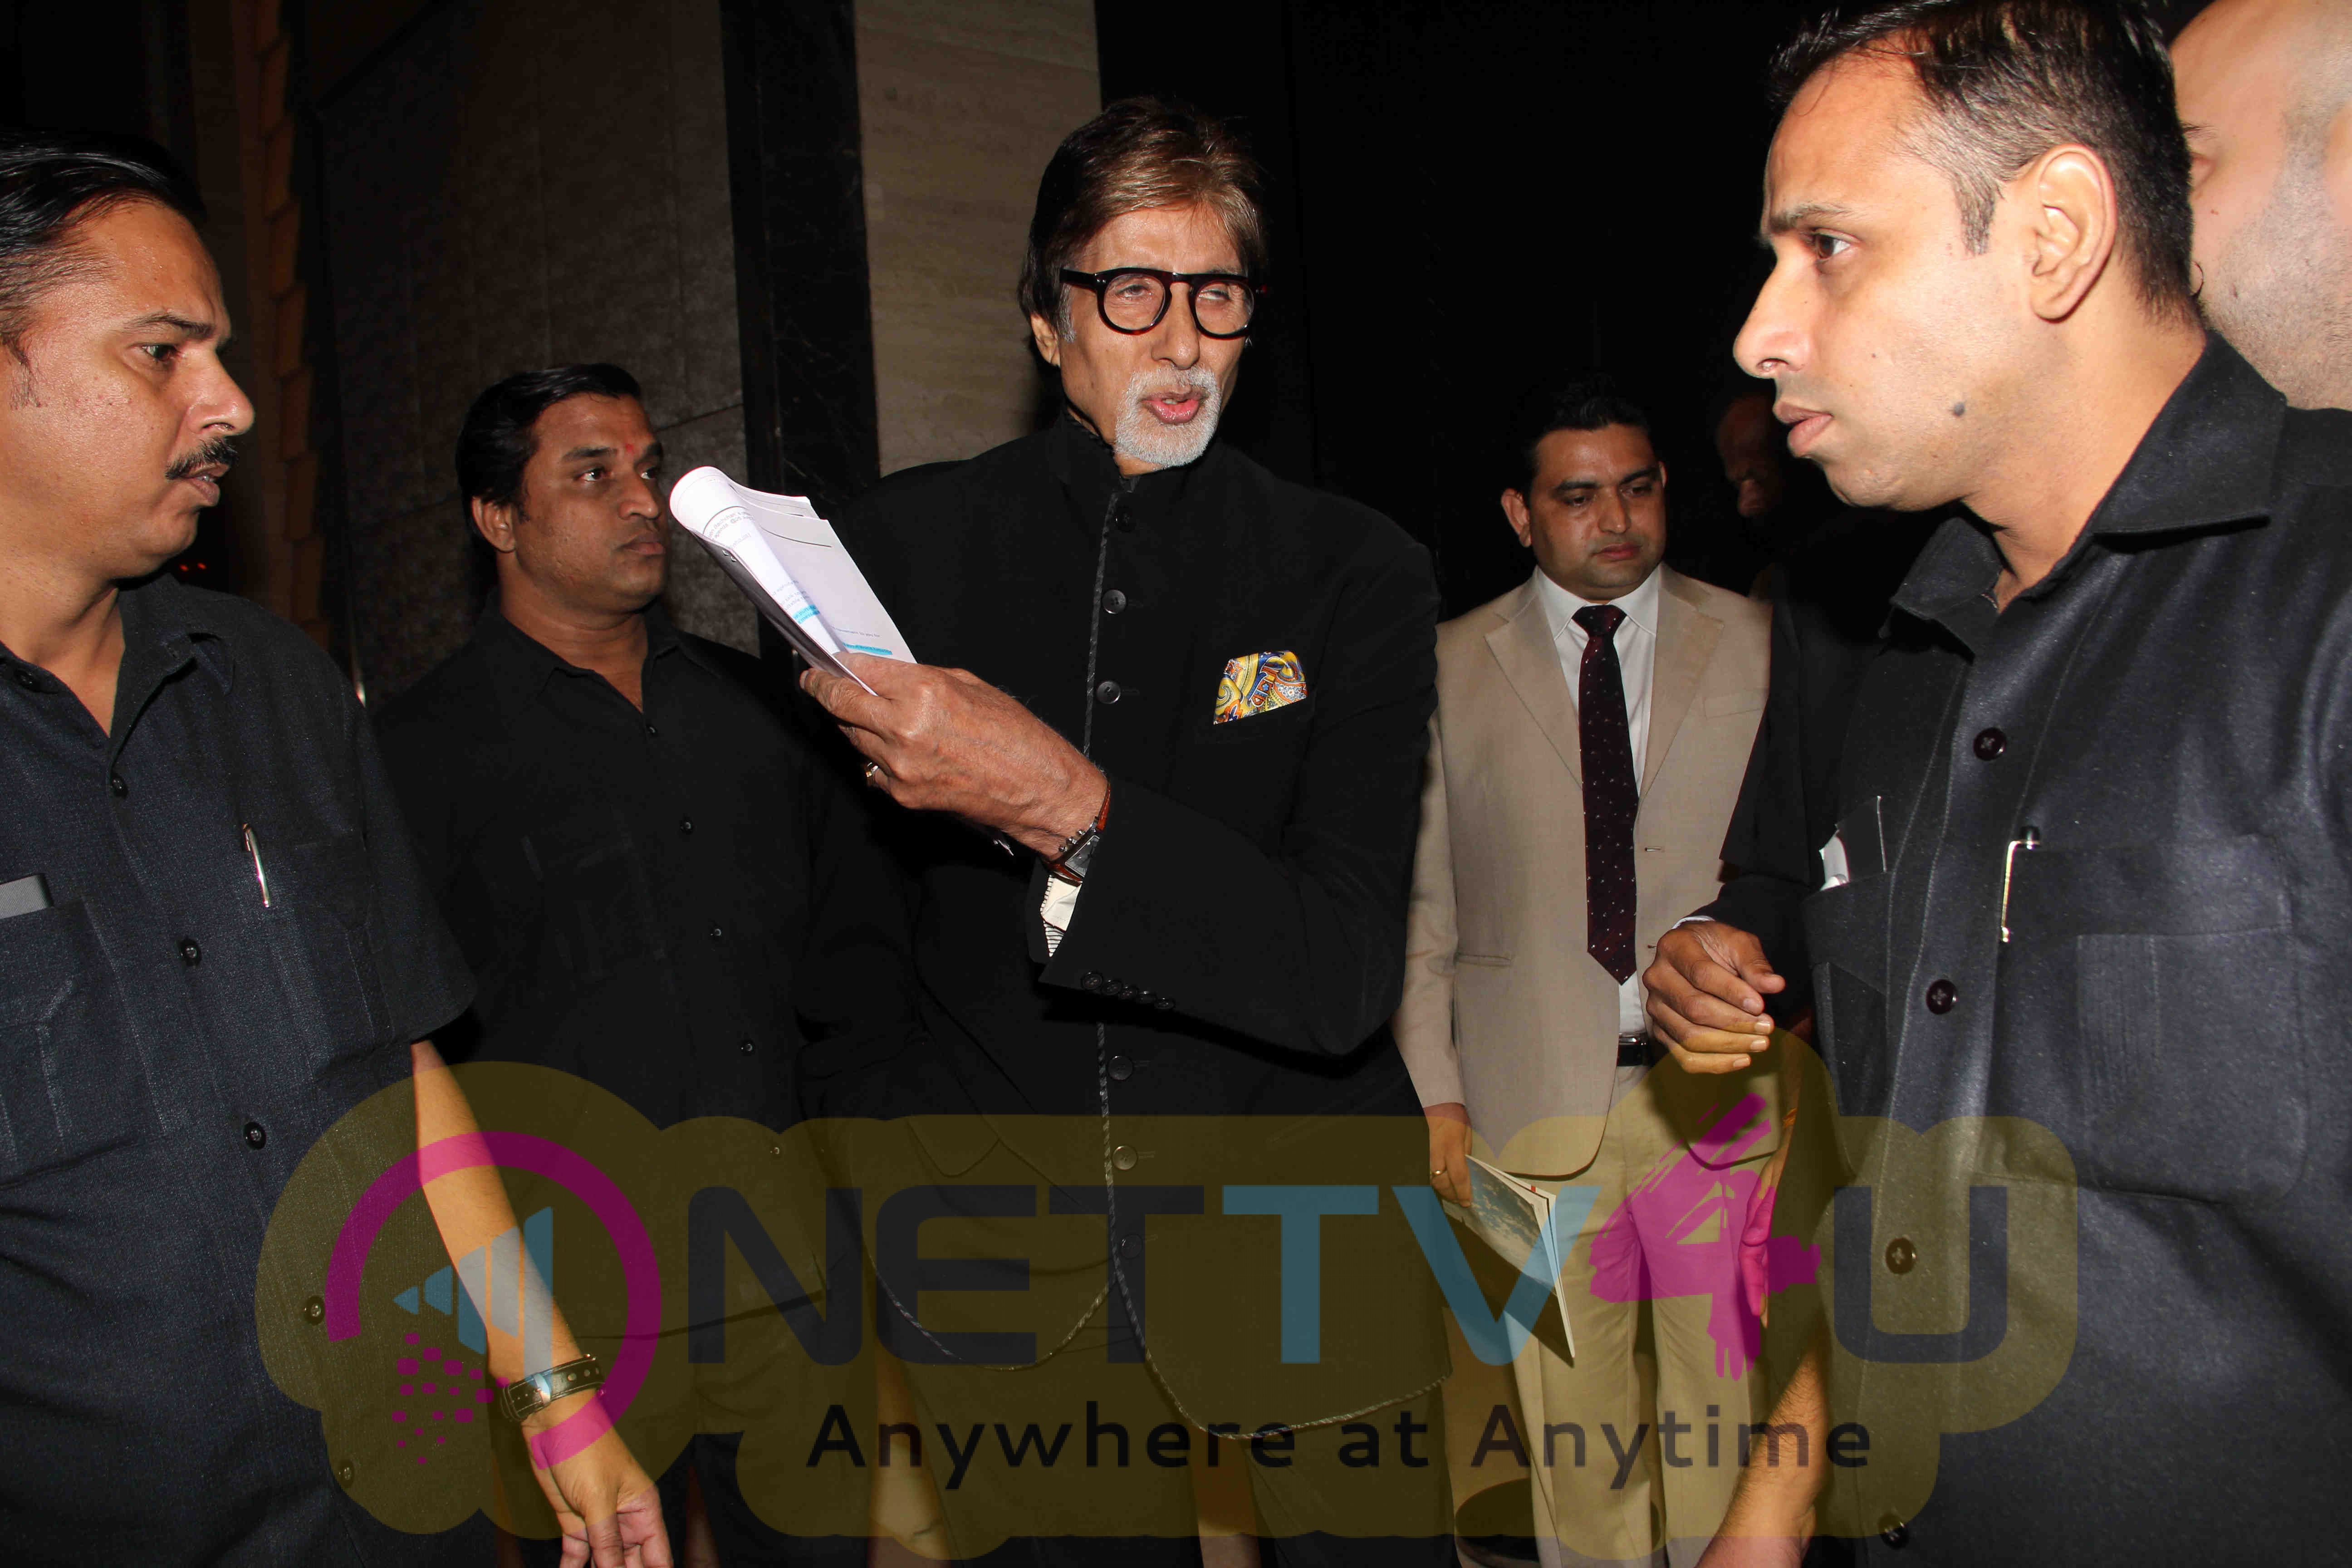 Amitabh Bachchan Spreads Awareness About Hepatitis On World Hepatitis Day 2016 Grand Photos Hindi Gallery